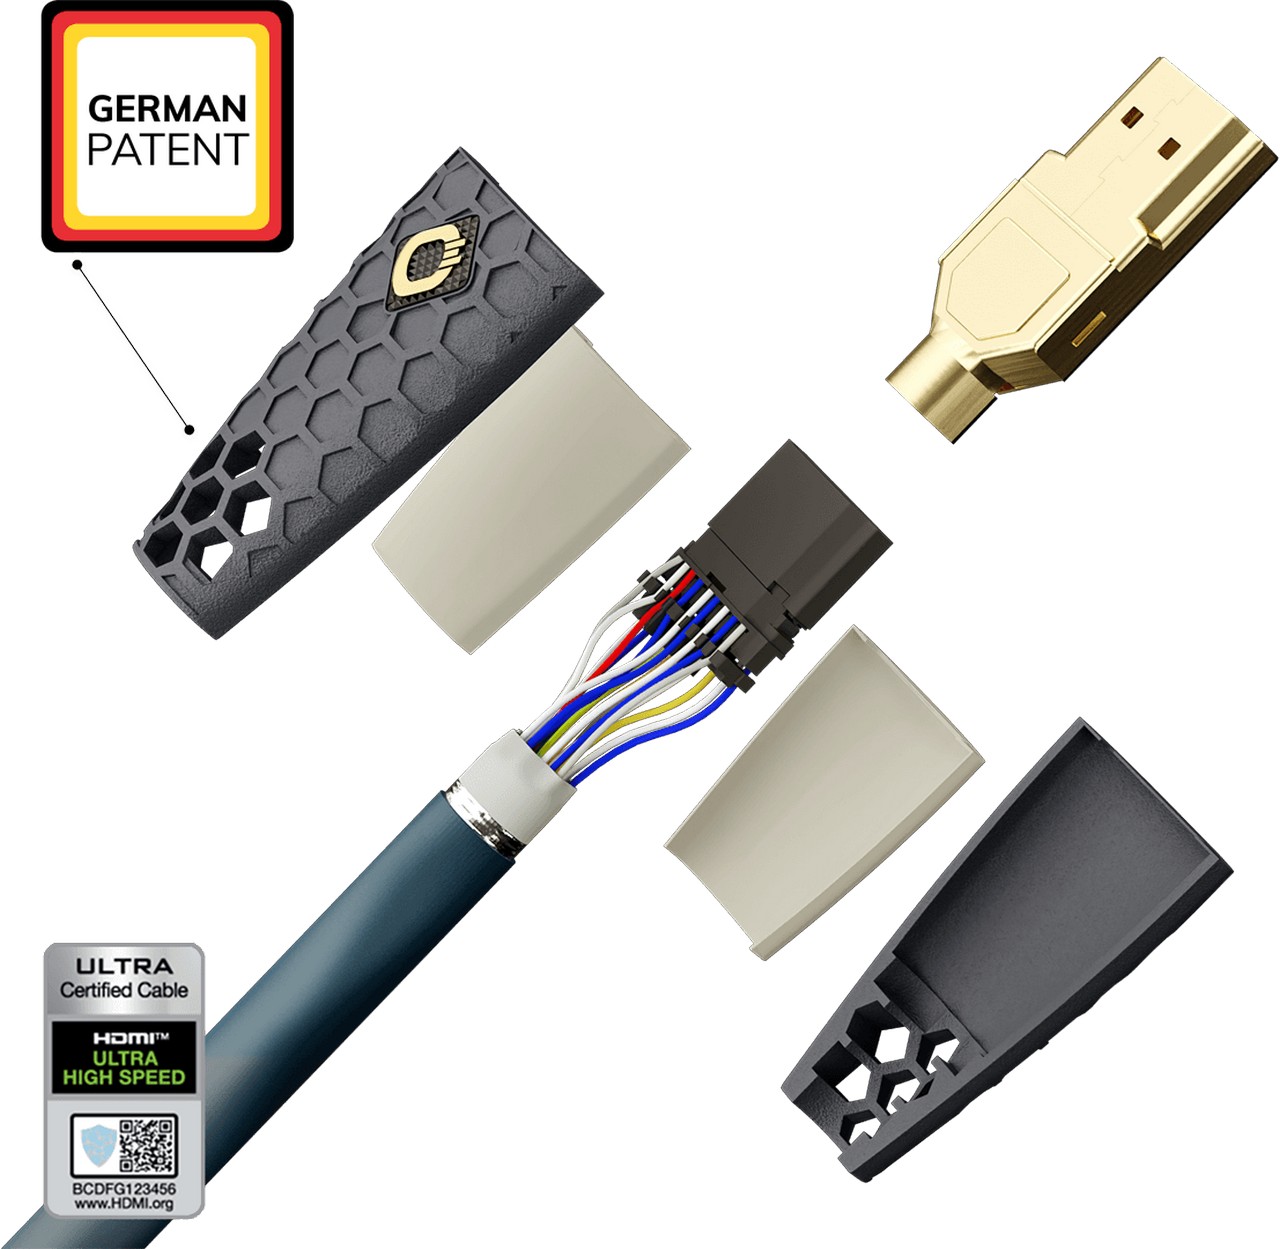 Oehlbach OB 92601 Flex Evolution UHD HDMI kábel 1,5 méter